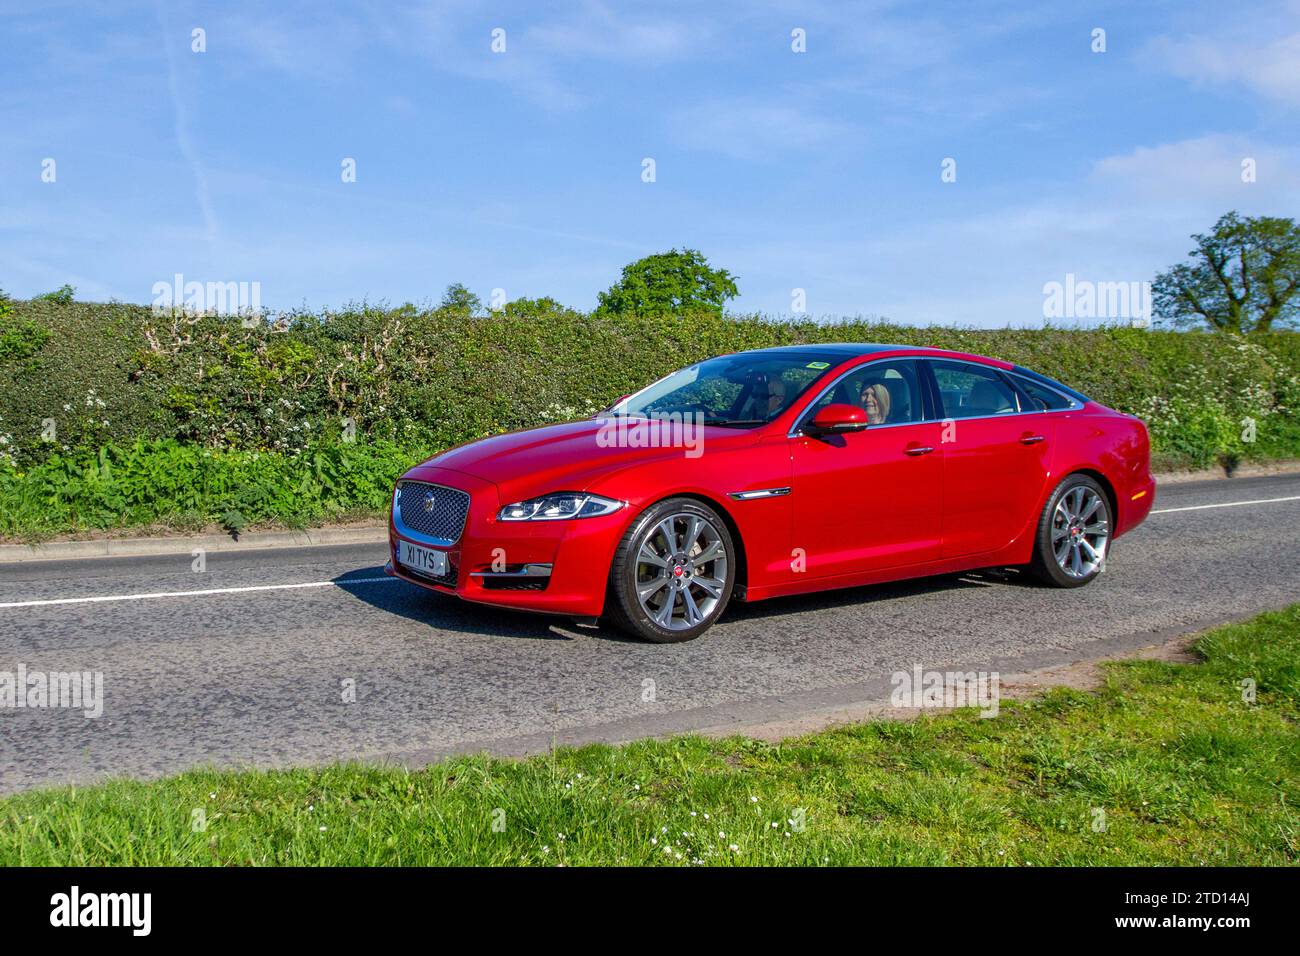 2016 Red British Jaguar XJ D V6 PORTFOLIO 2993 cc Diesel 8 speed automatic, Stock Photo